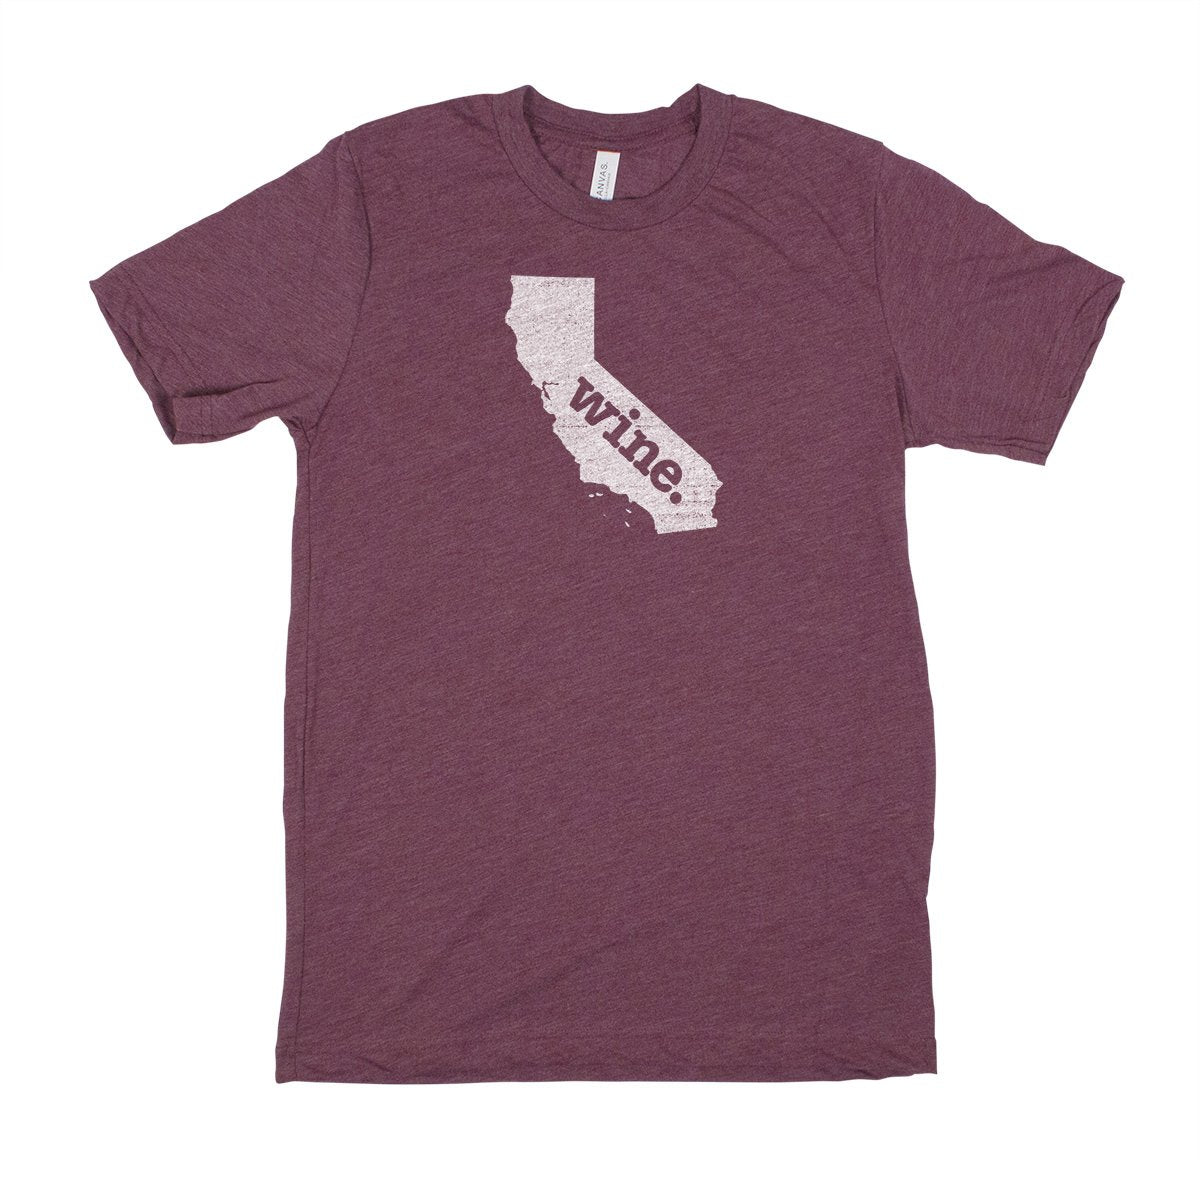 beer. Men's Unisex T-Shirt - South Carolina